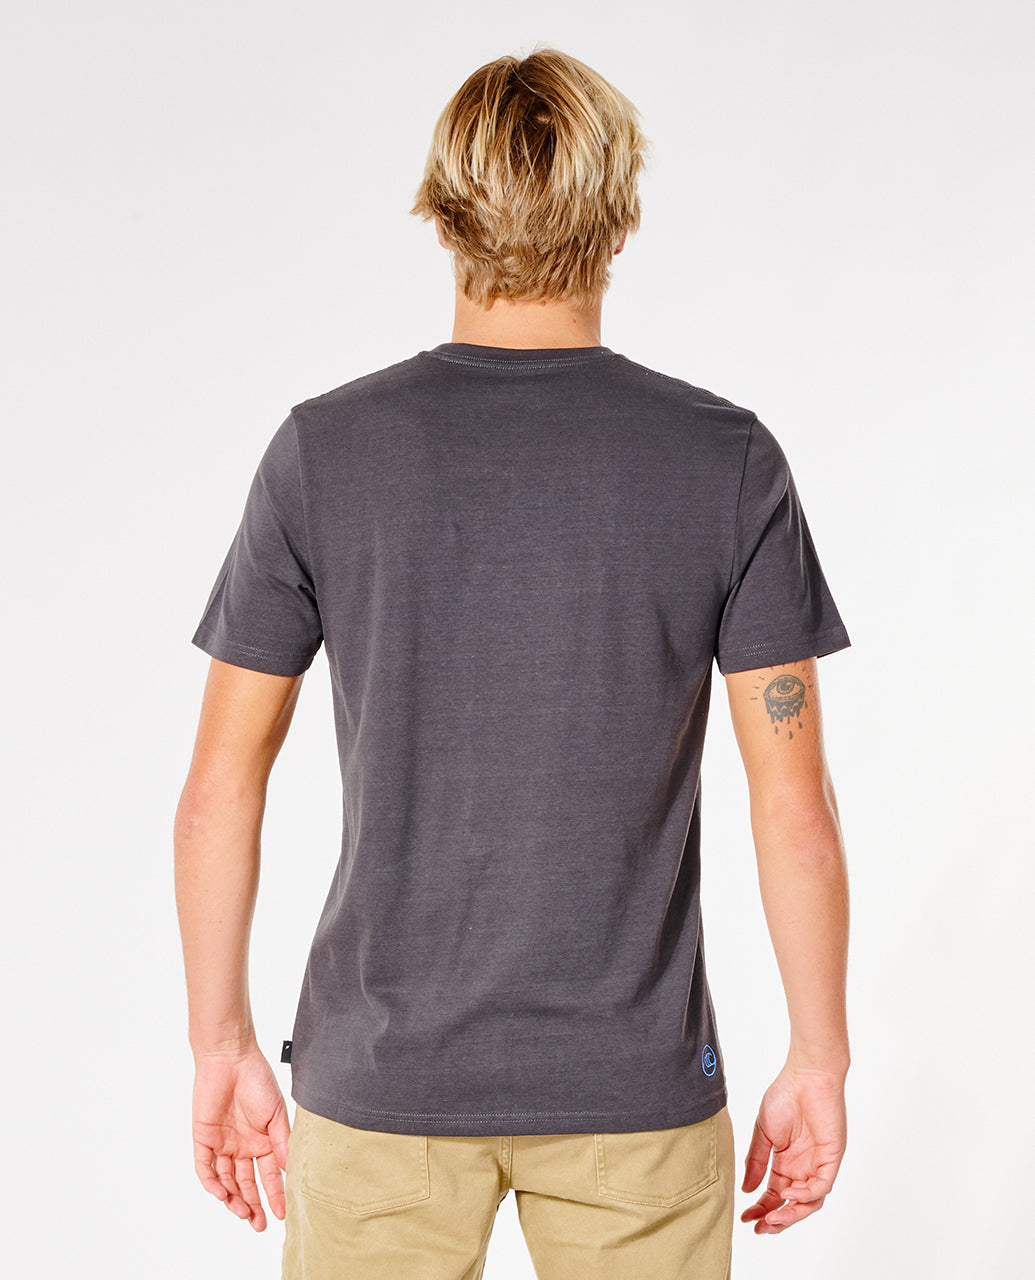 [SALE] Men's BELLS PRO short sleeve T-shirt